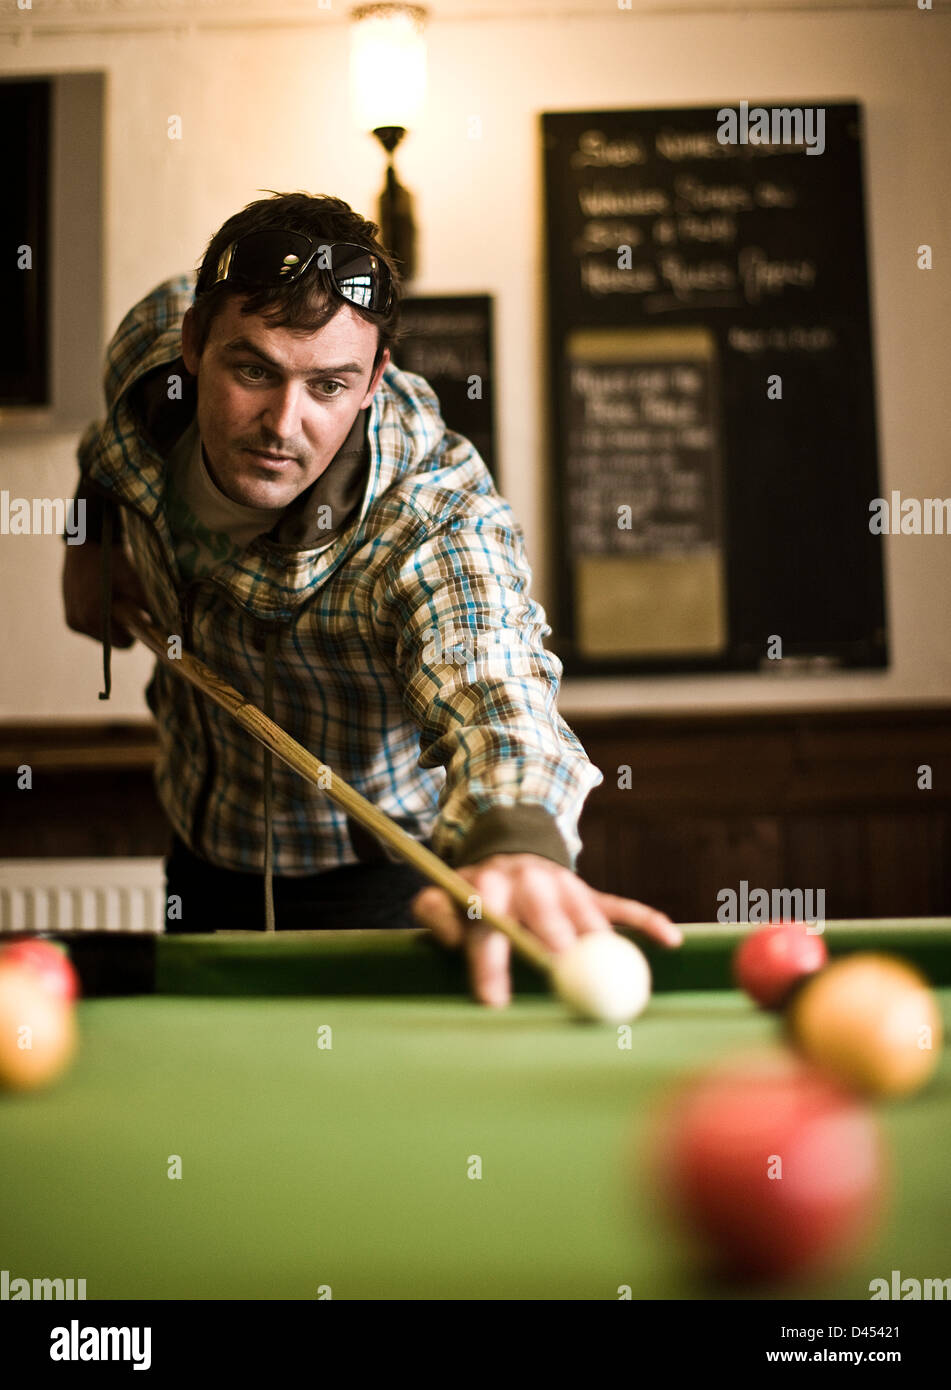 Billardspieler am Billardtisch, St. Agnes, Cornwall, UK Stockfoto